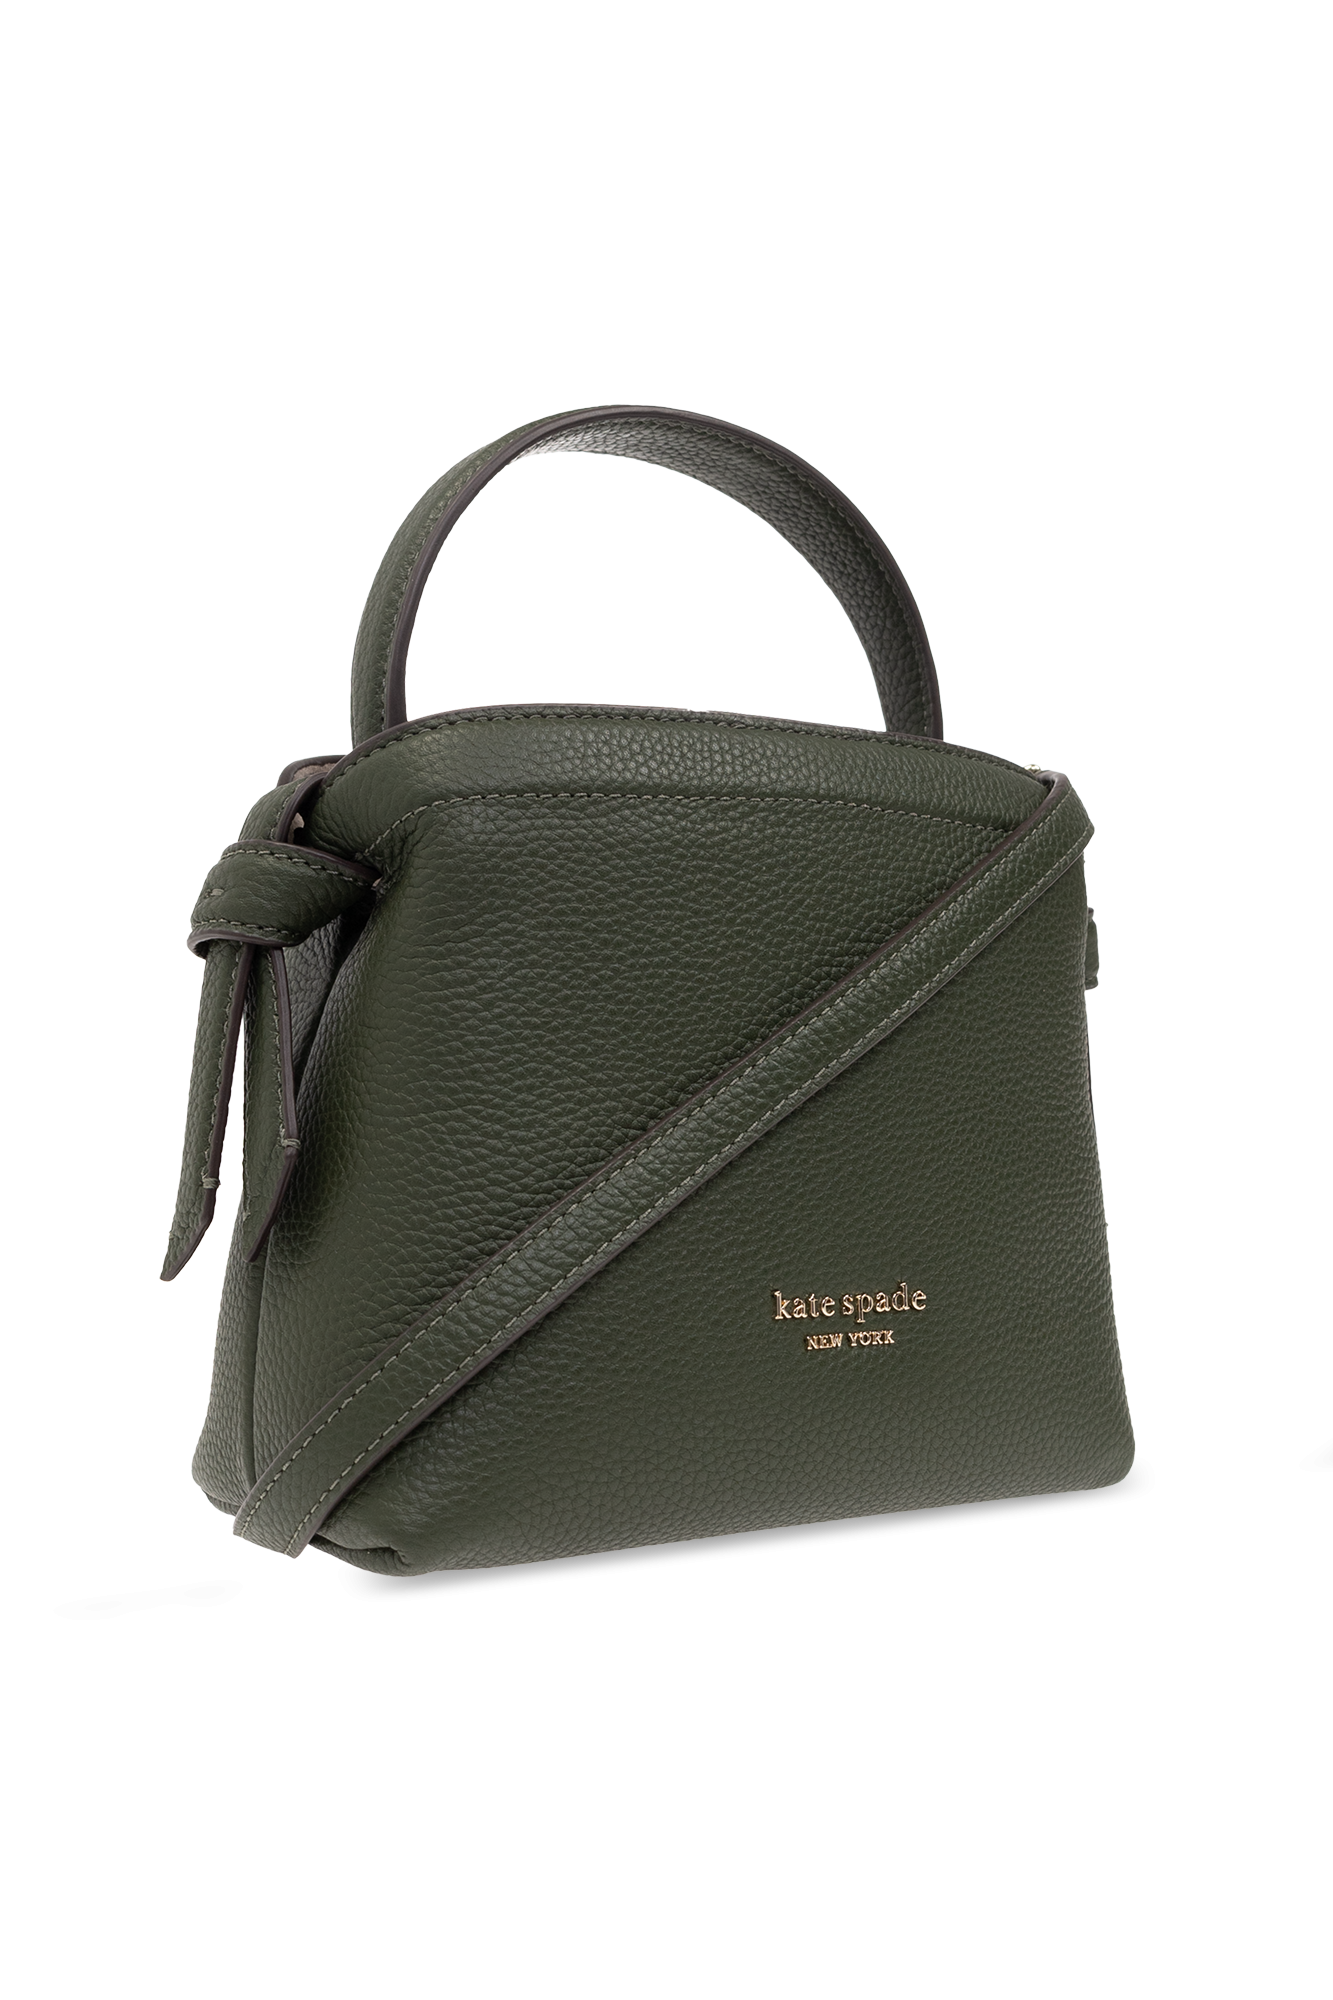 Kate Spade New York Knott Handbag grained leather dark green